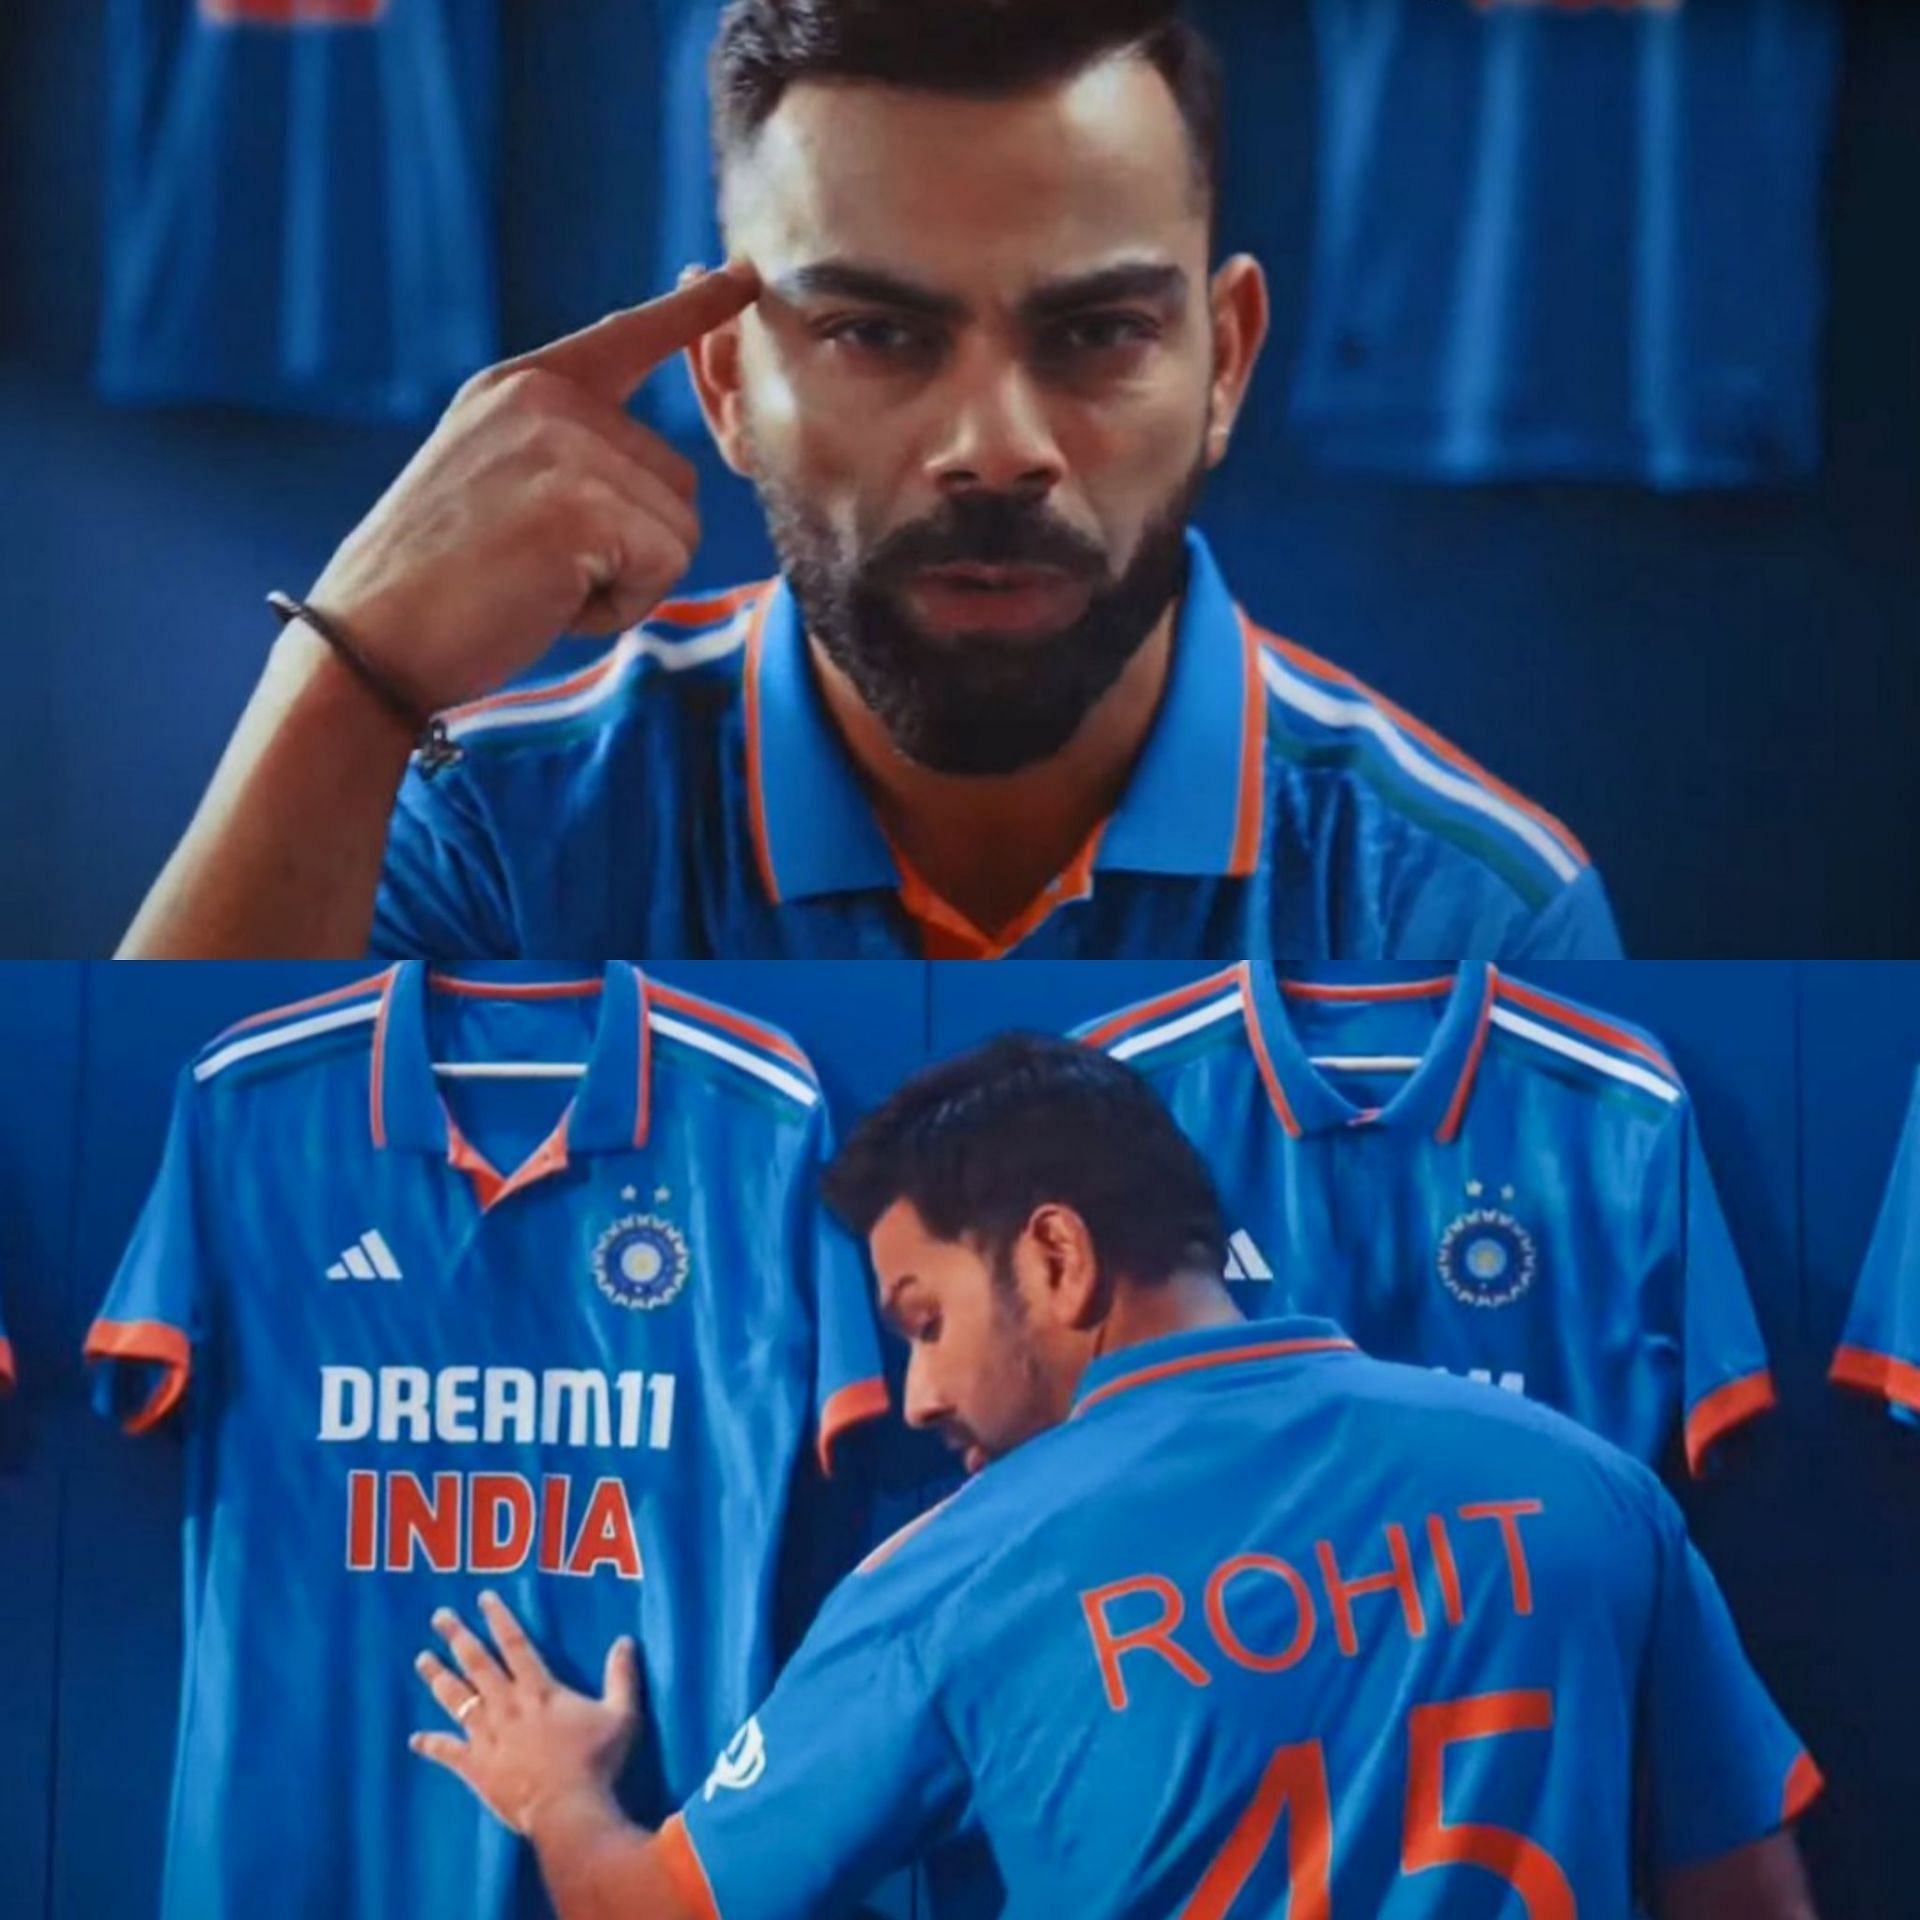 Virat Kohli and Rohit Sharma during the India jersey reveal [Adidas/Sportskeeda]